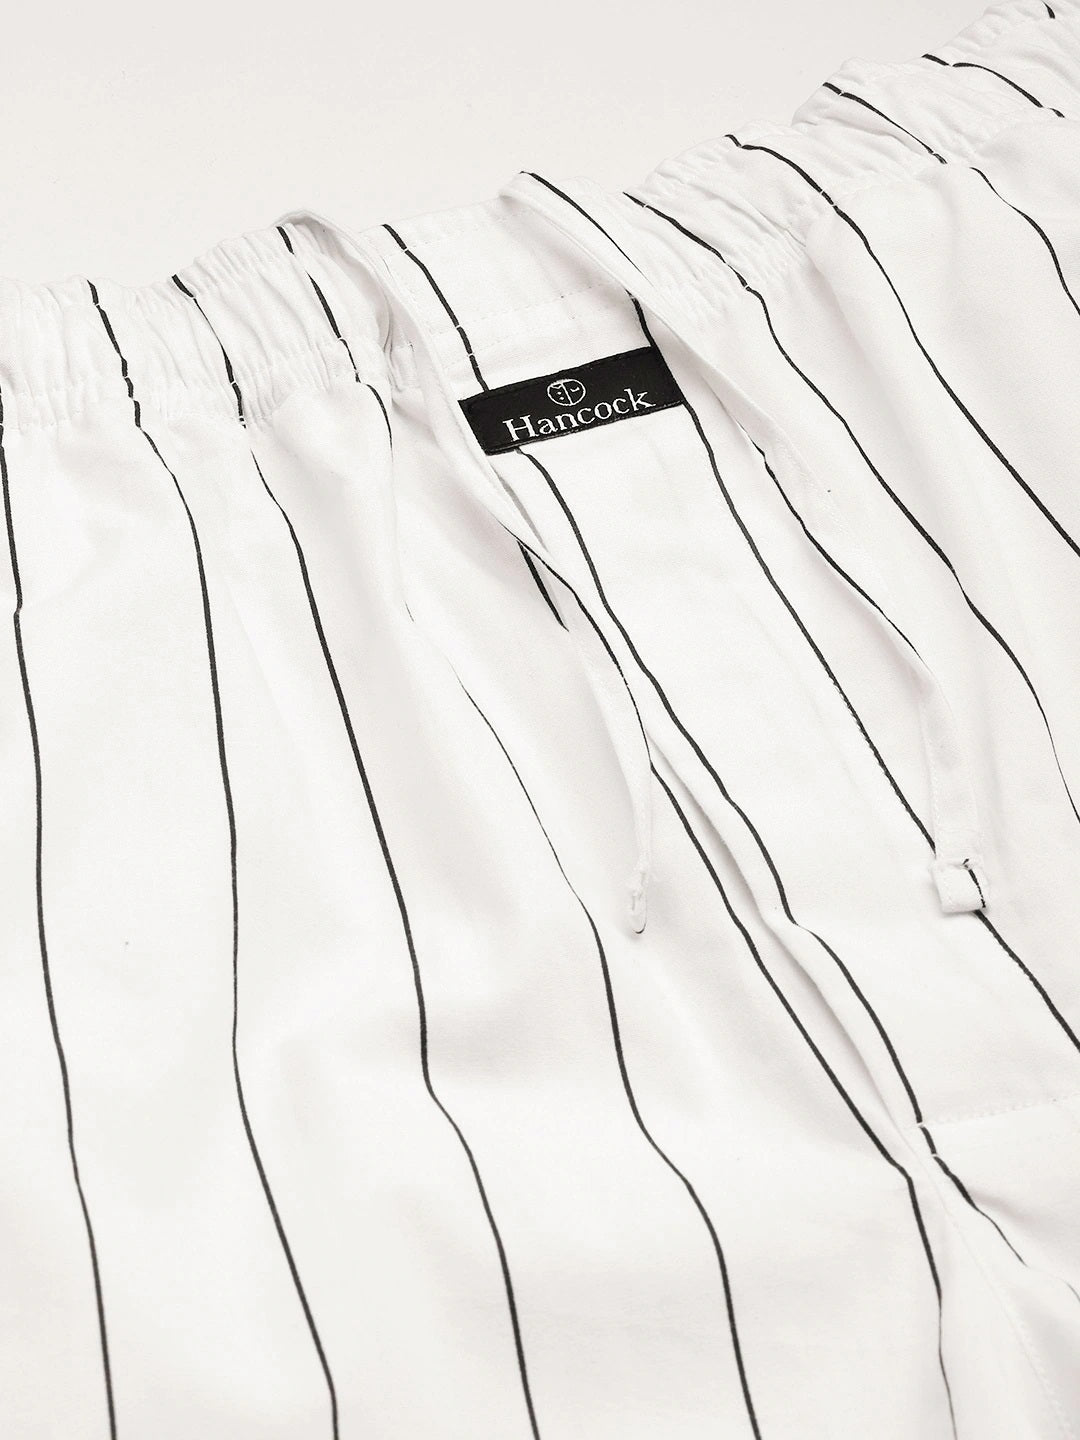 Men White Stripes Pure Cotton Regular Fit Night Wear Night Suit